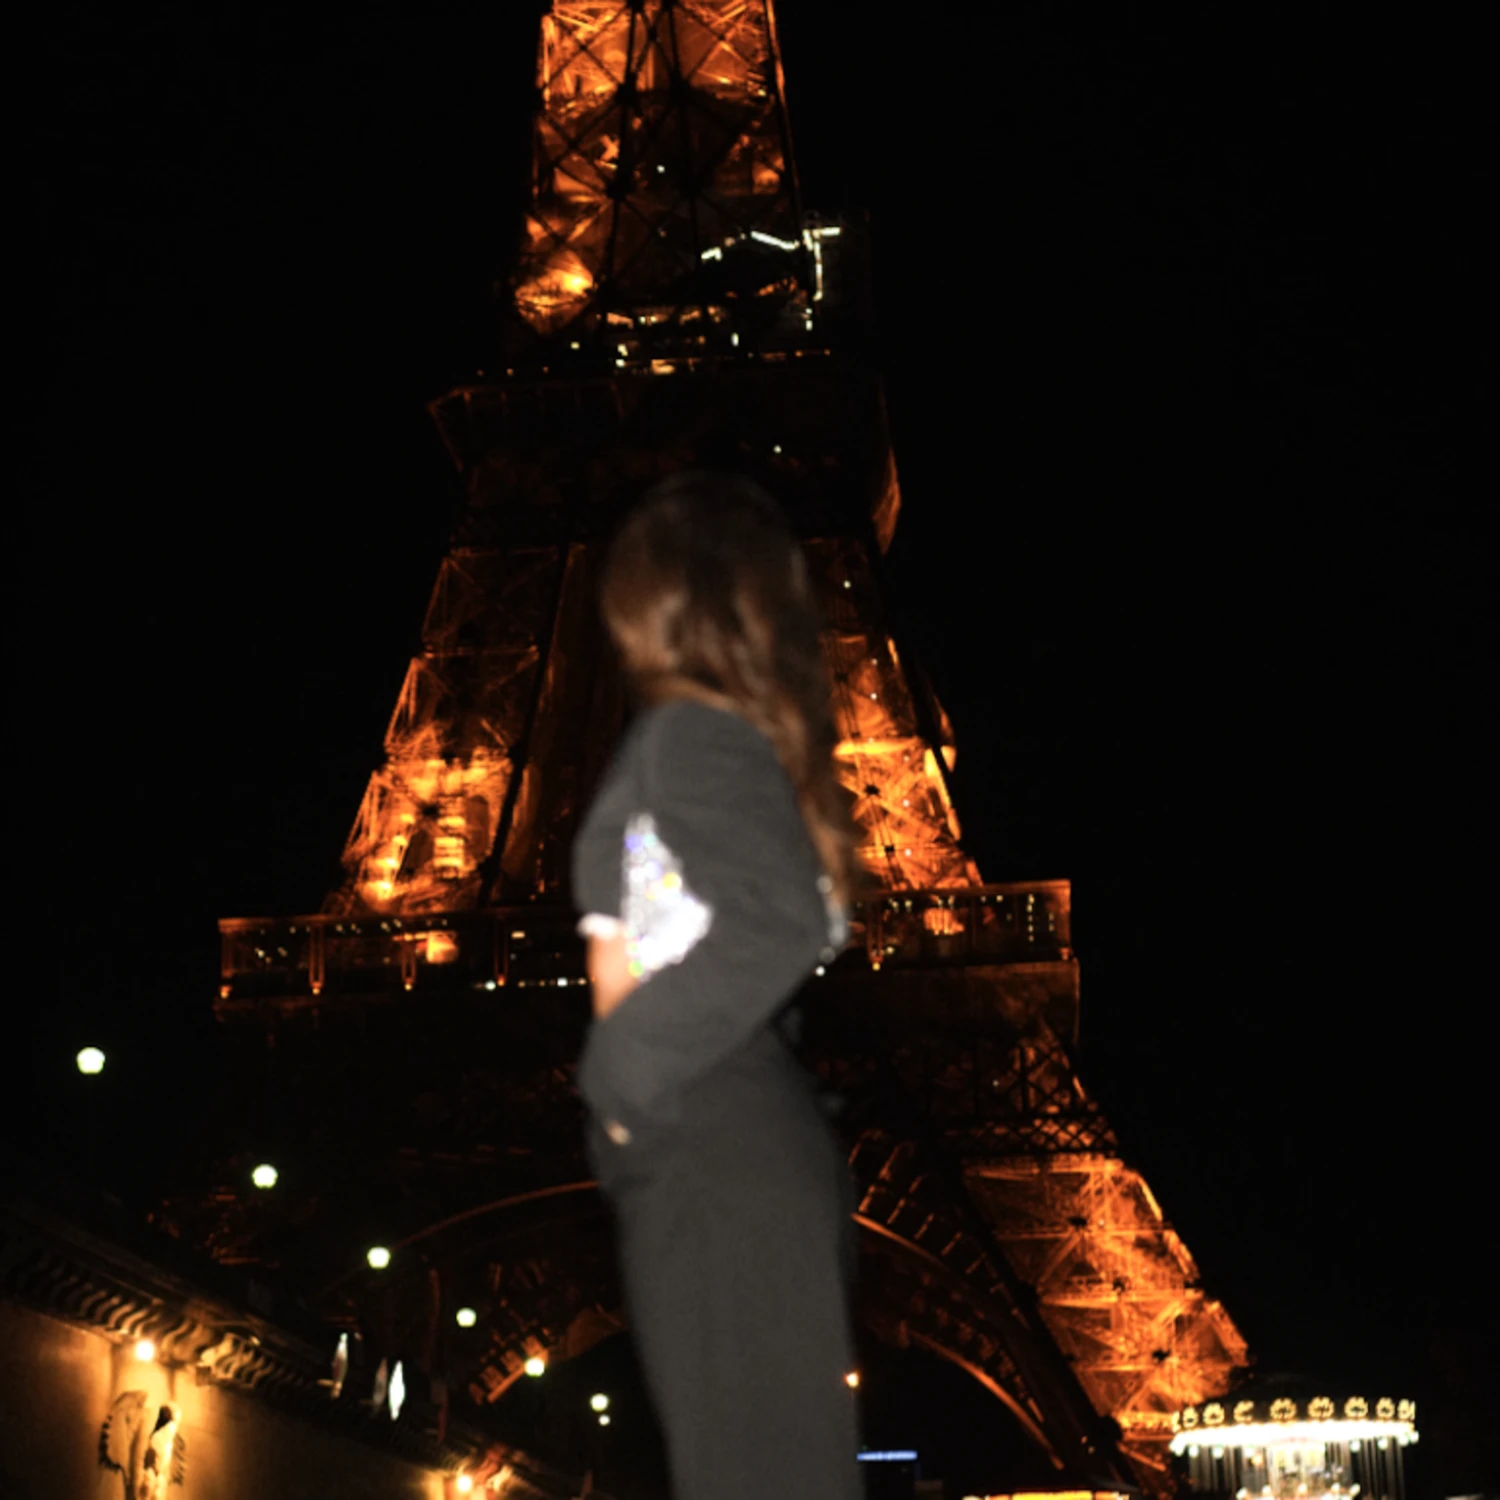 Eifel tower at night